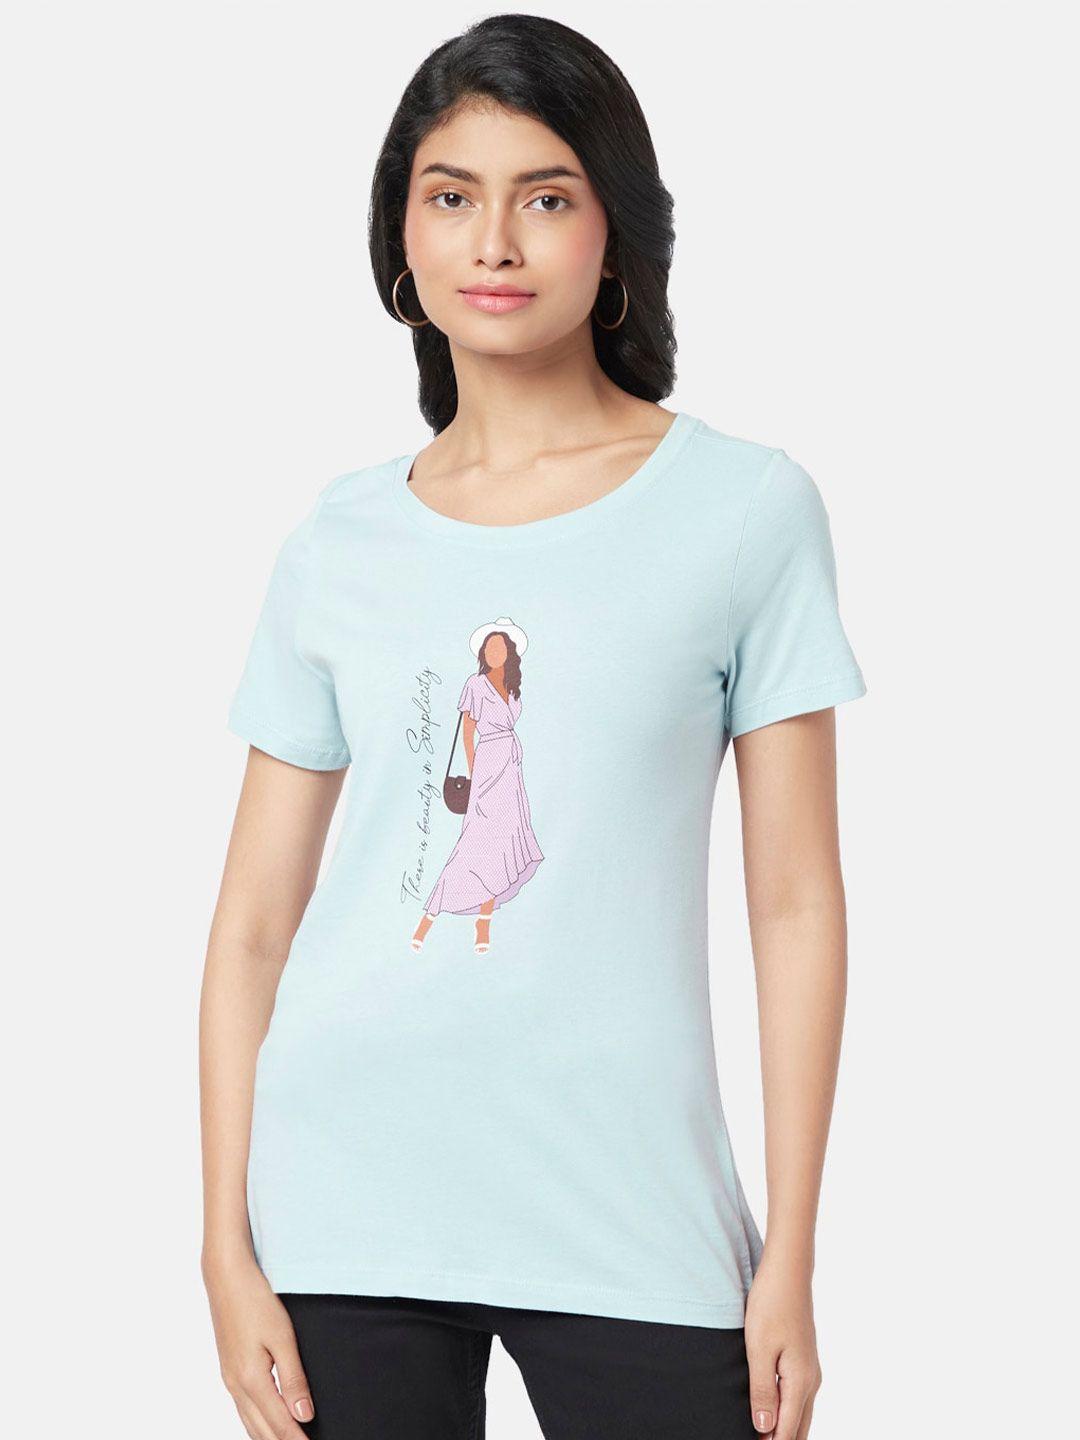 honey by pantaloons women printed t-shirt